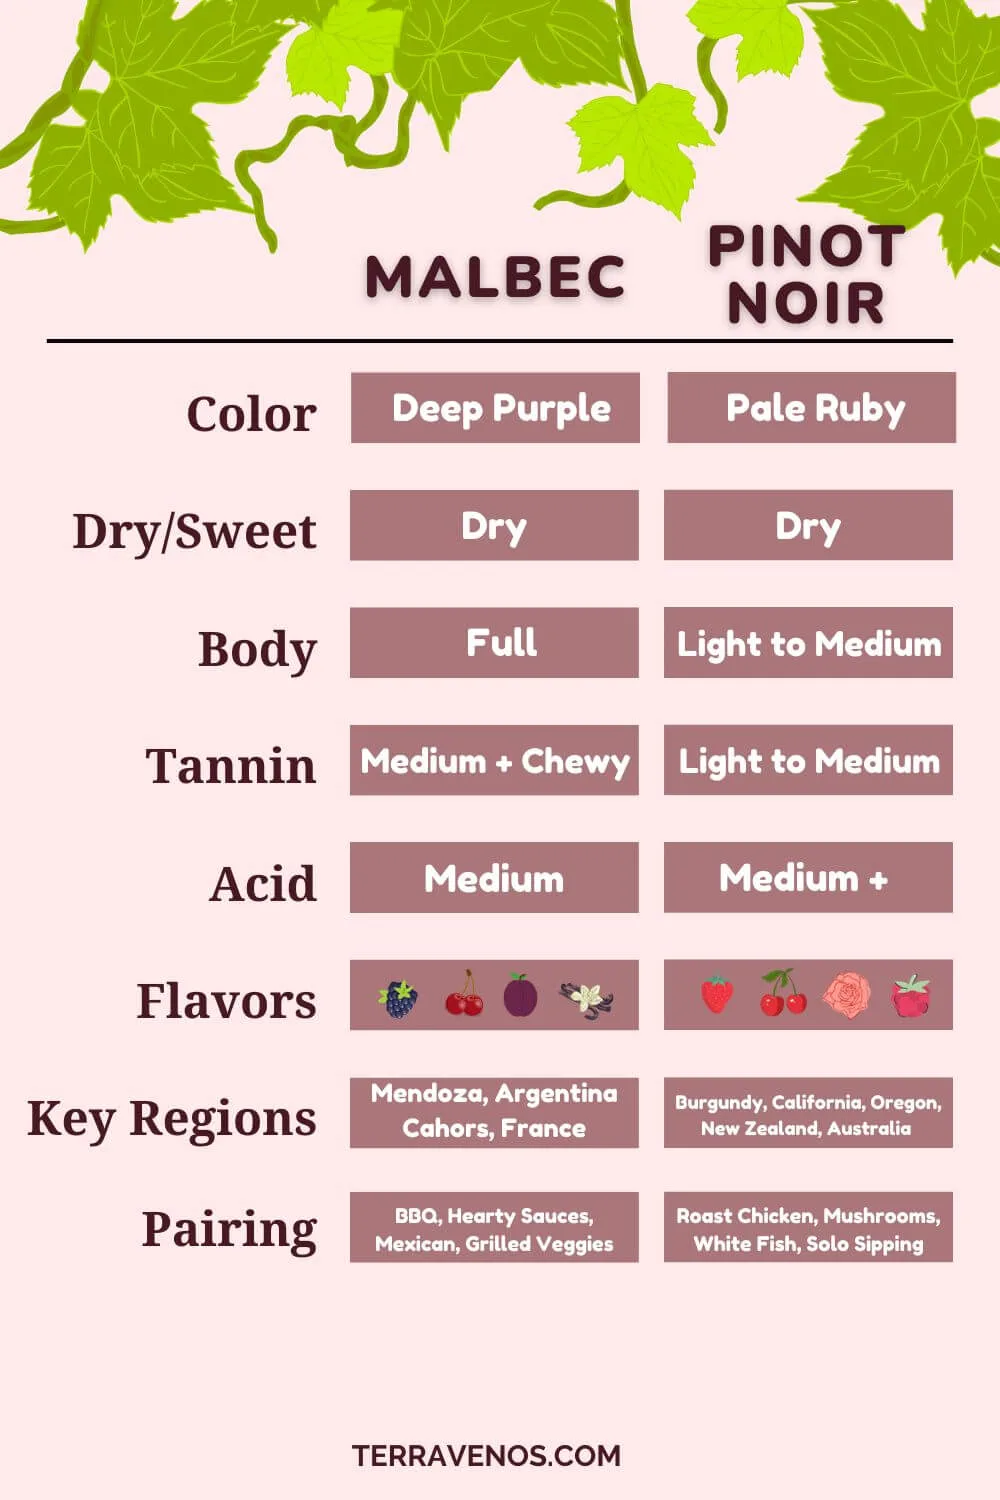 malbec-vs-pinot-noir-infographic